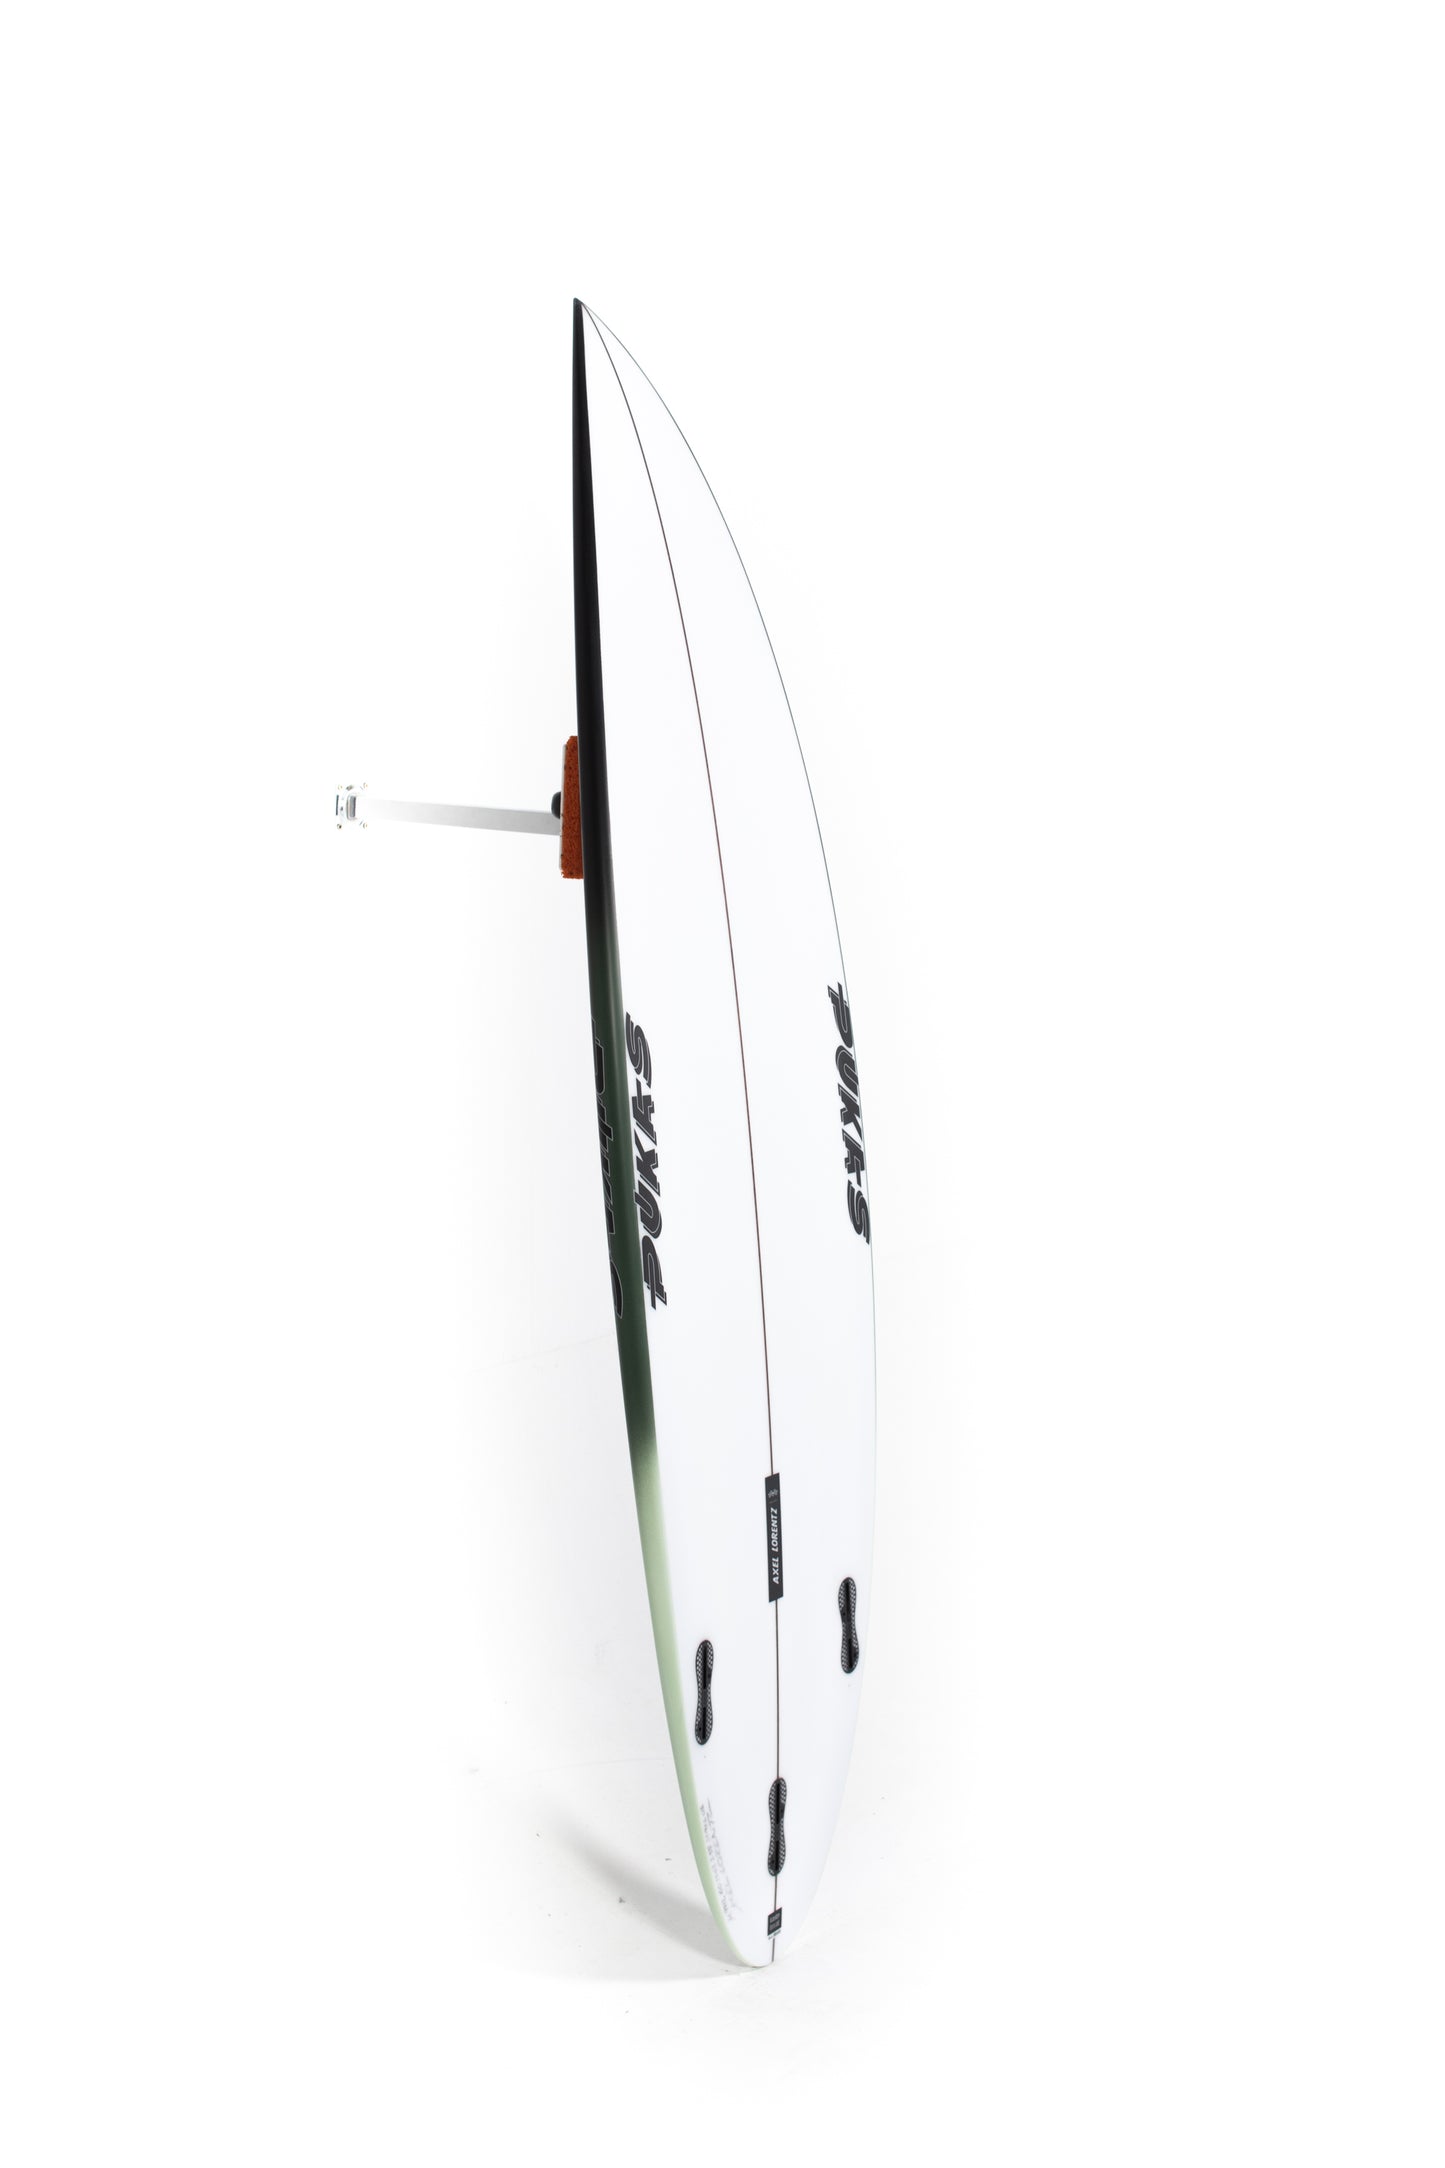 
                  
                    Pukas Surf Shop - Pukas Surfboard - TASTY TREAT ALL ROUND by Axel Lorentz - 6'0" x 19.63 x 2.55 x 31.96L - AX099912
                  
                